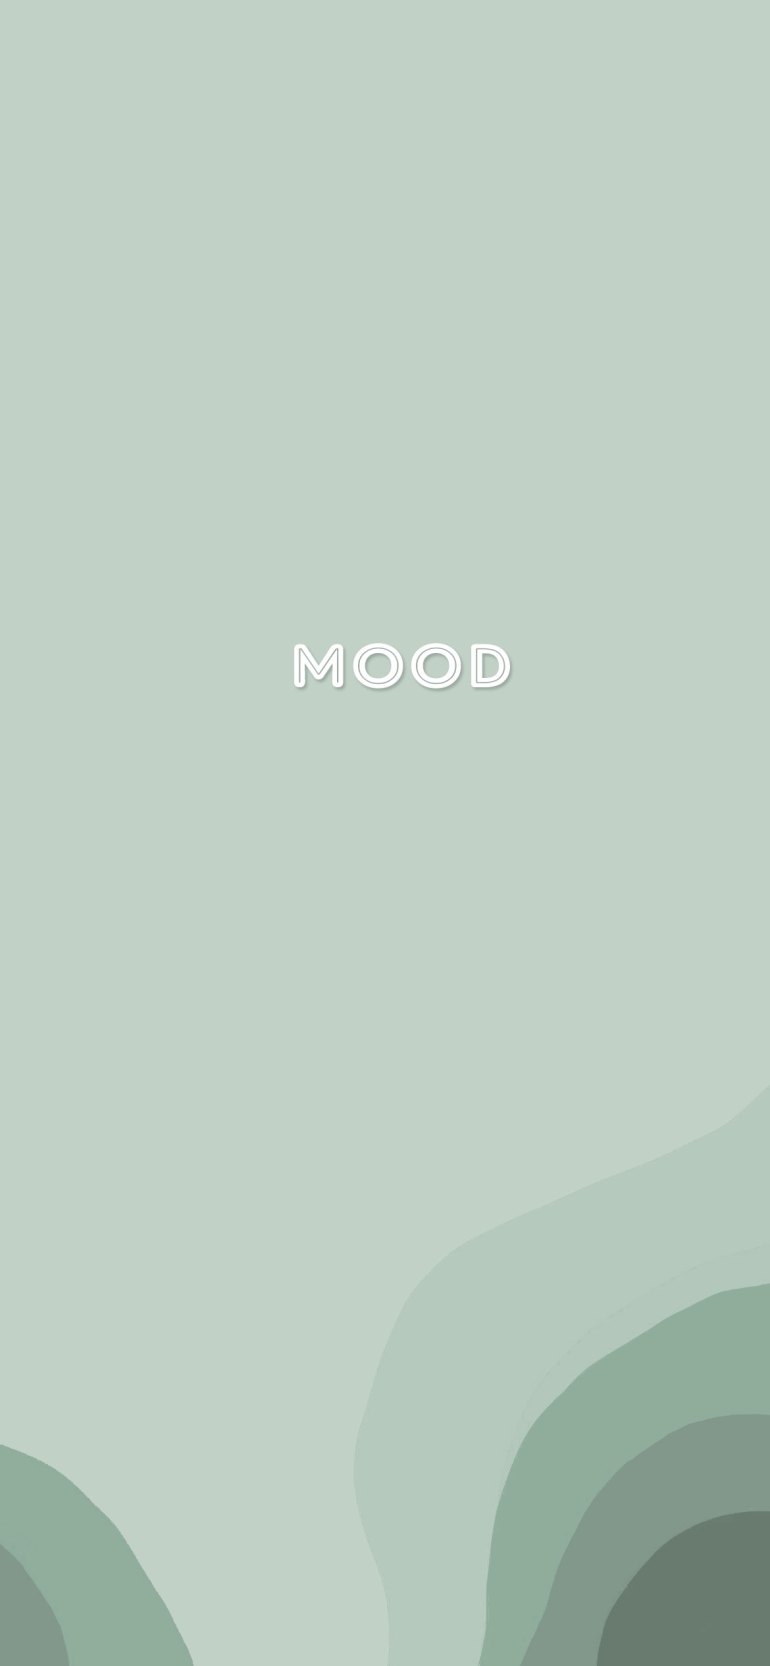 Aesthetic Mood Wallpapers